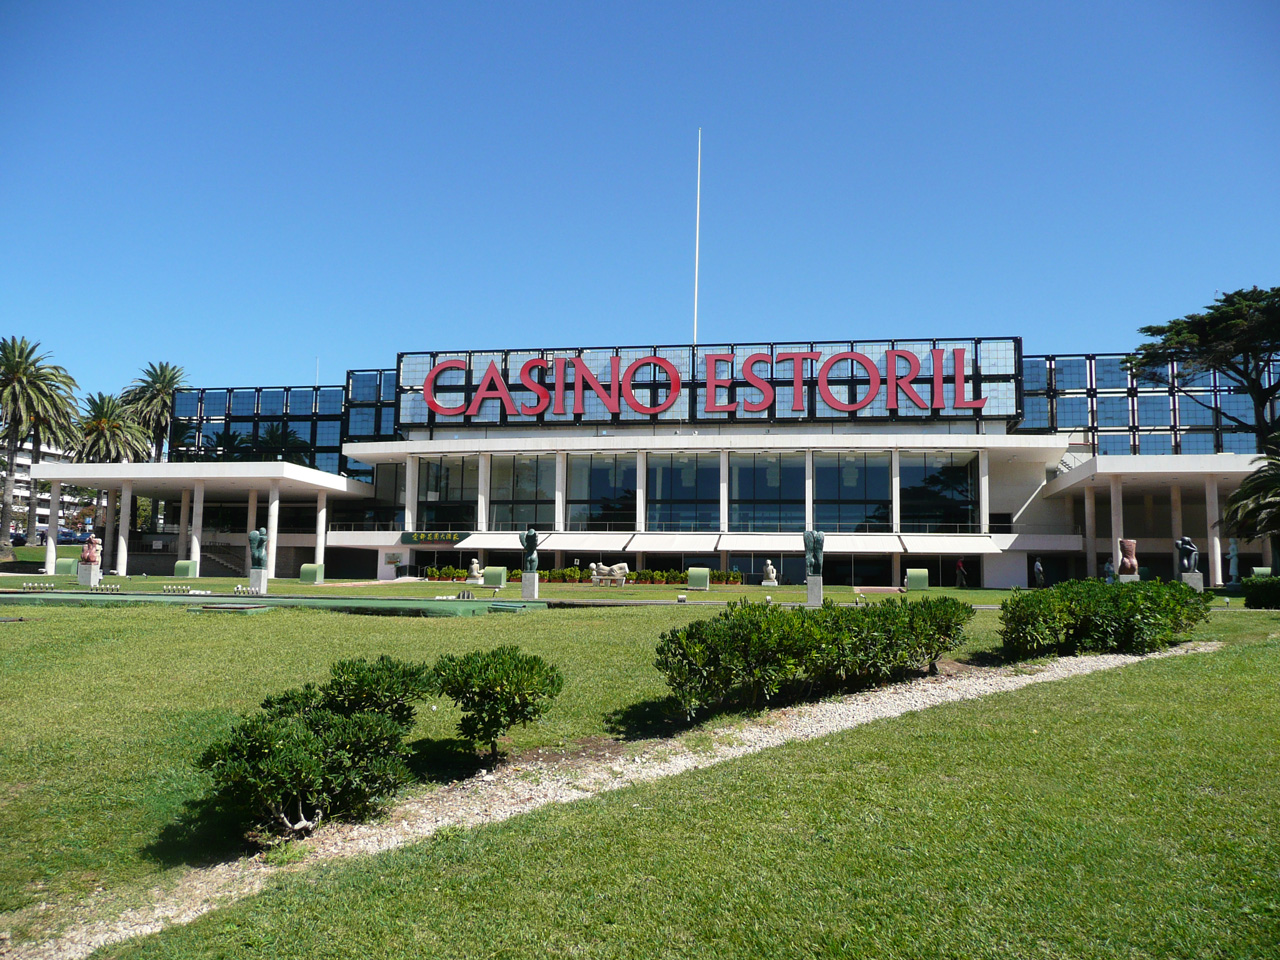 Casino de Estoril. Photo: Aquiler de Coches